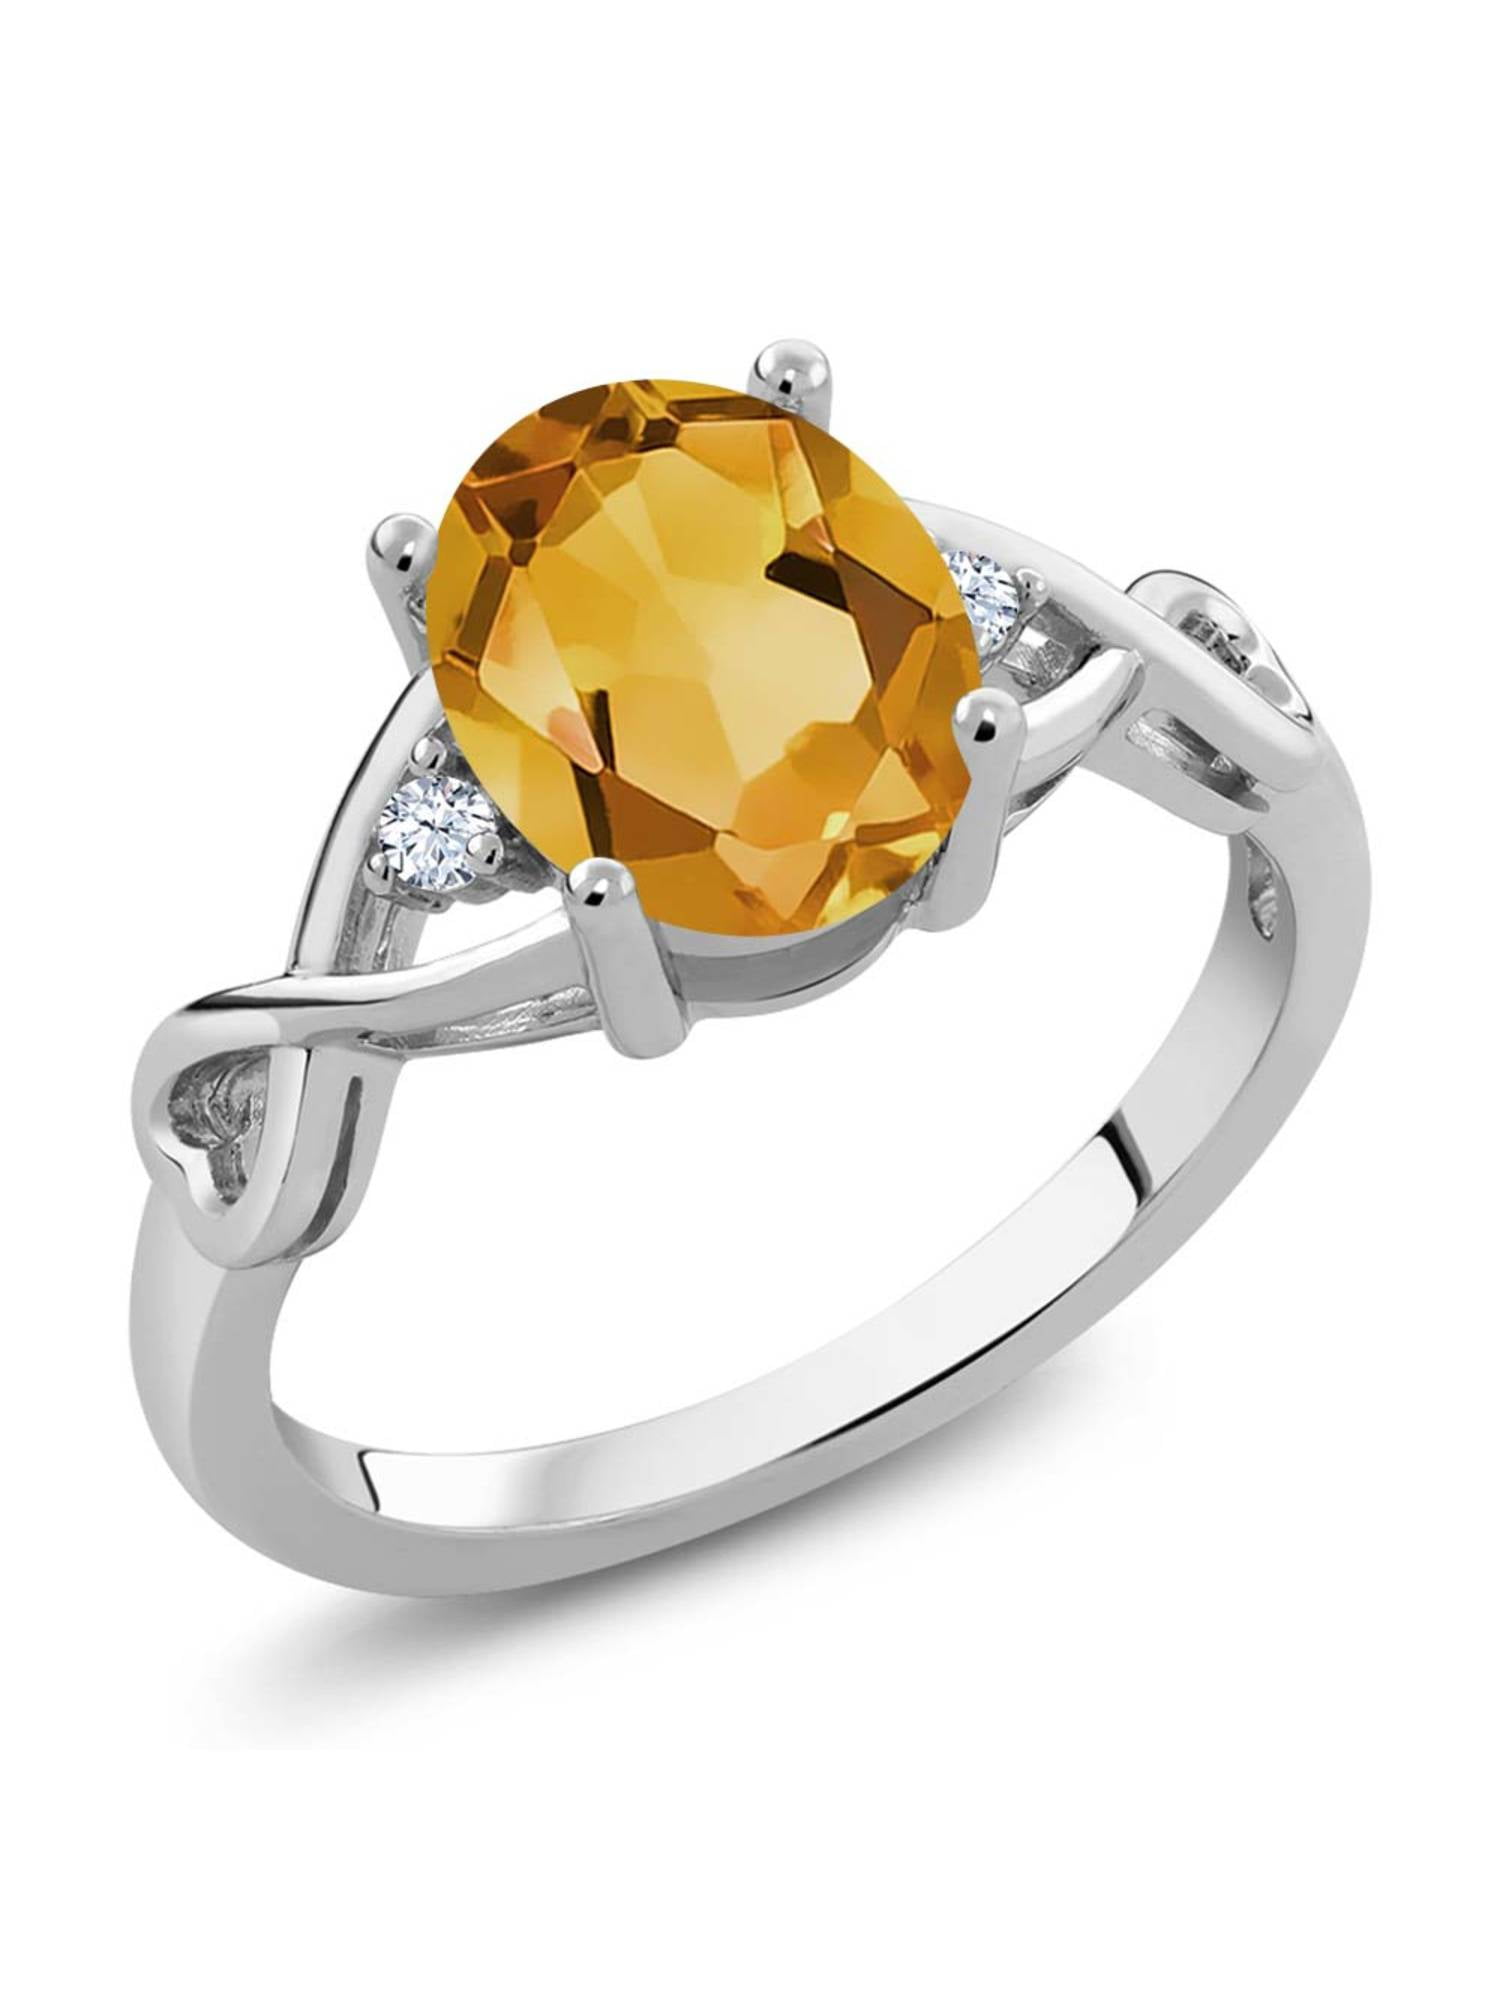 gift for her Gemstone ring Golden Topaz Oval Ring Boho & Ethnic Wear November birthstone 925 Sterling Silver Jewelry Dainty ring